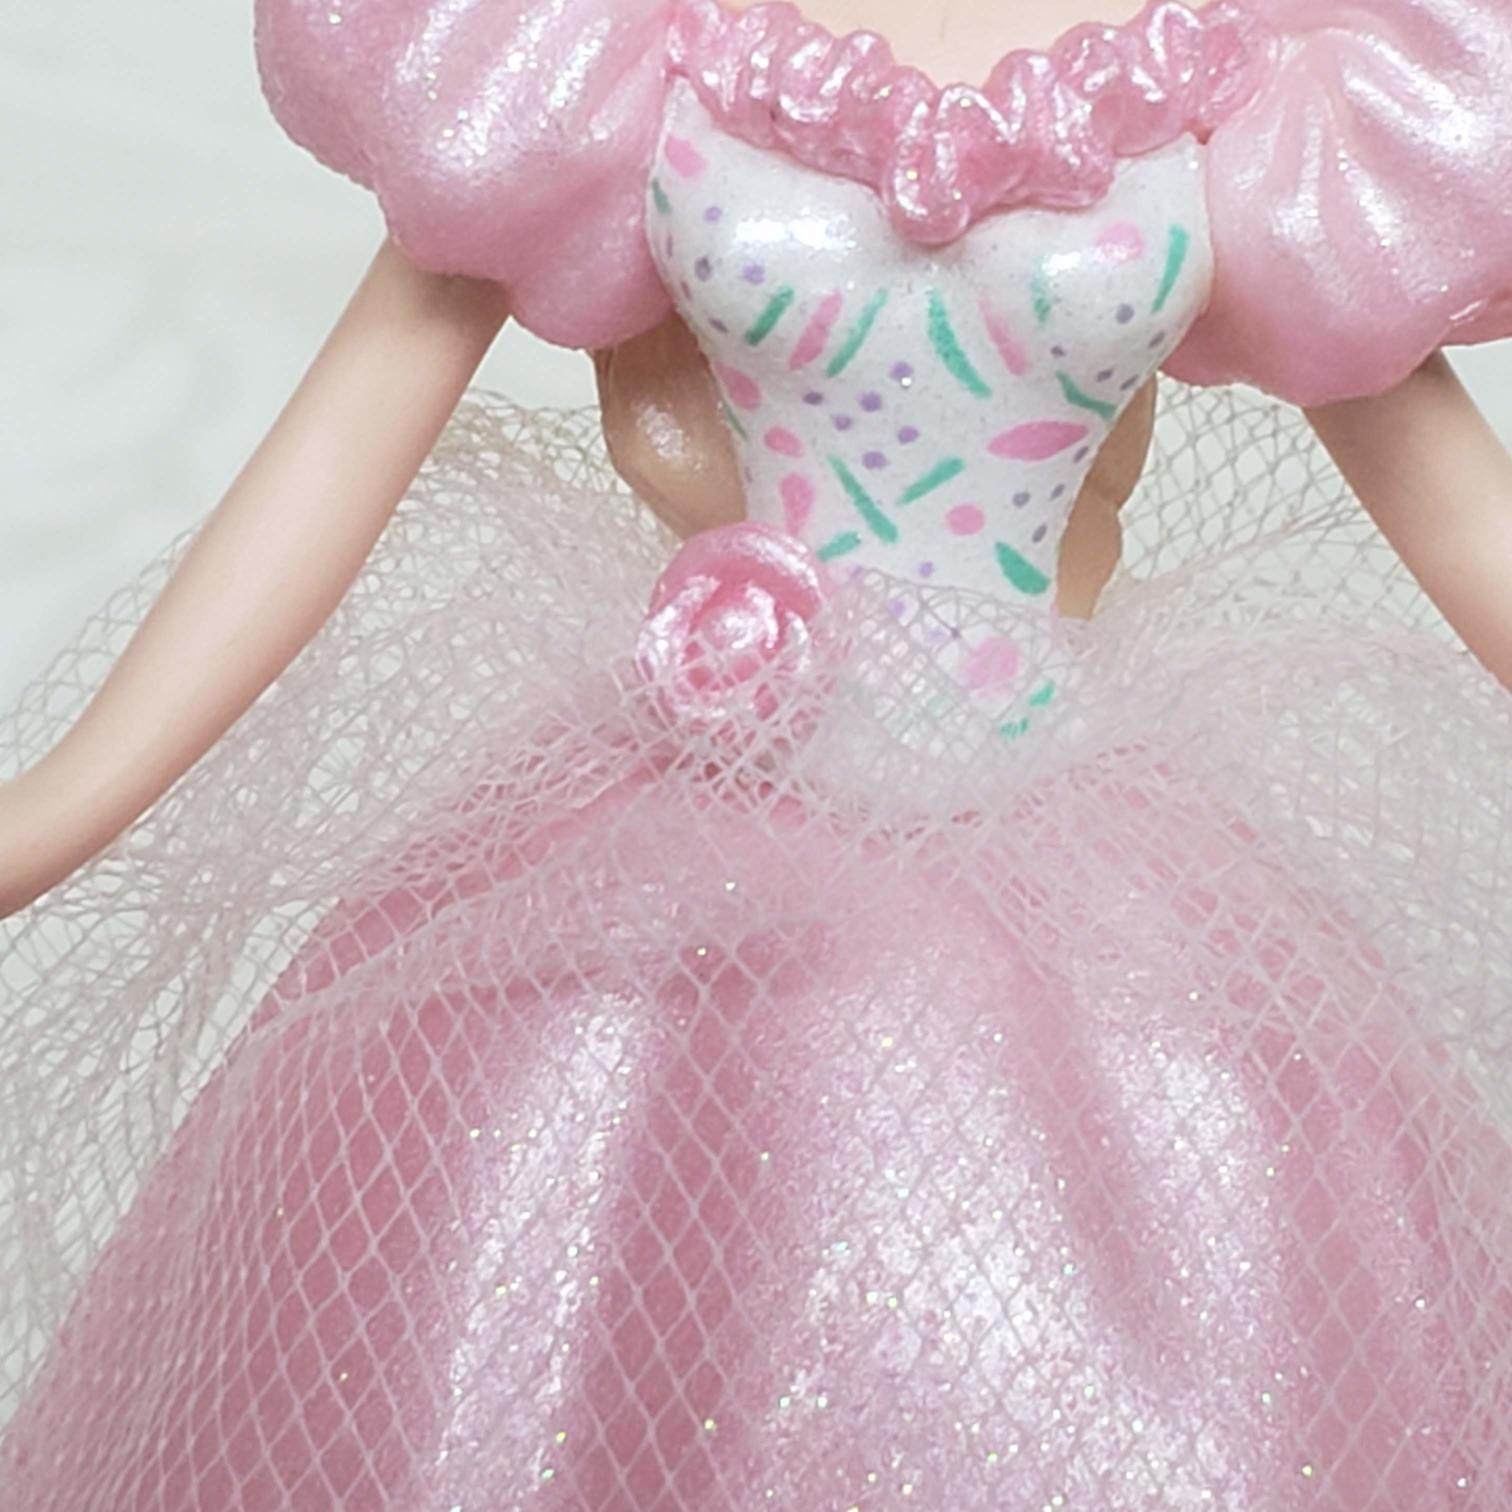 1996 Hallmark Keepsake Easter Springtime Collection Barbie Doll